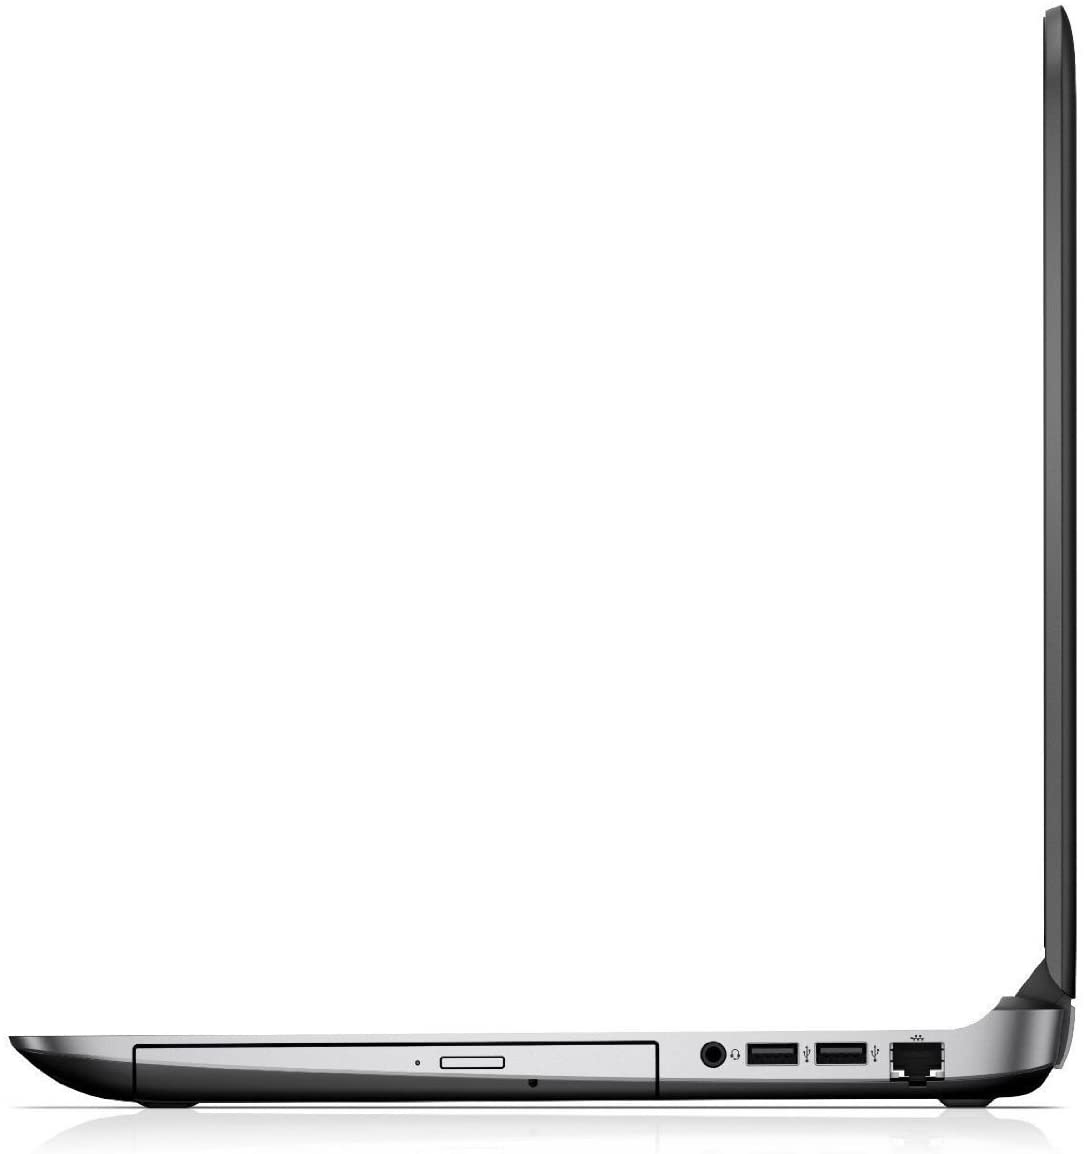 Refurbished Laptop HP ProBook 450 G3 15.6" Ultrabook (Intel Core i5-6200U 2.8GHz/8GB RAM/500GB HDD/Windows 10)